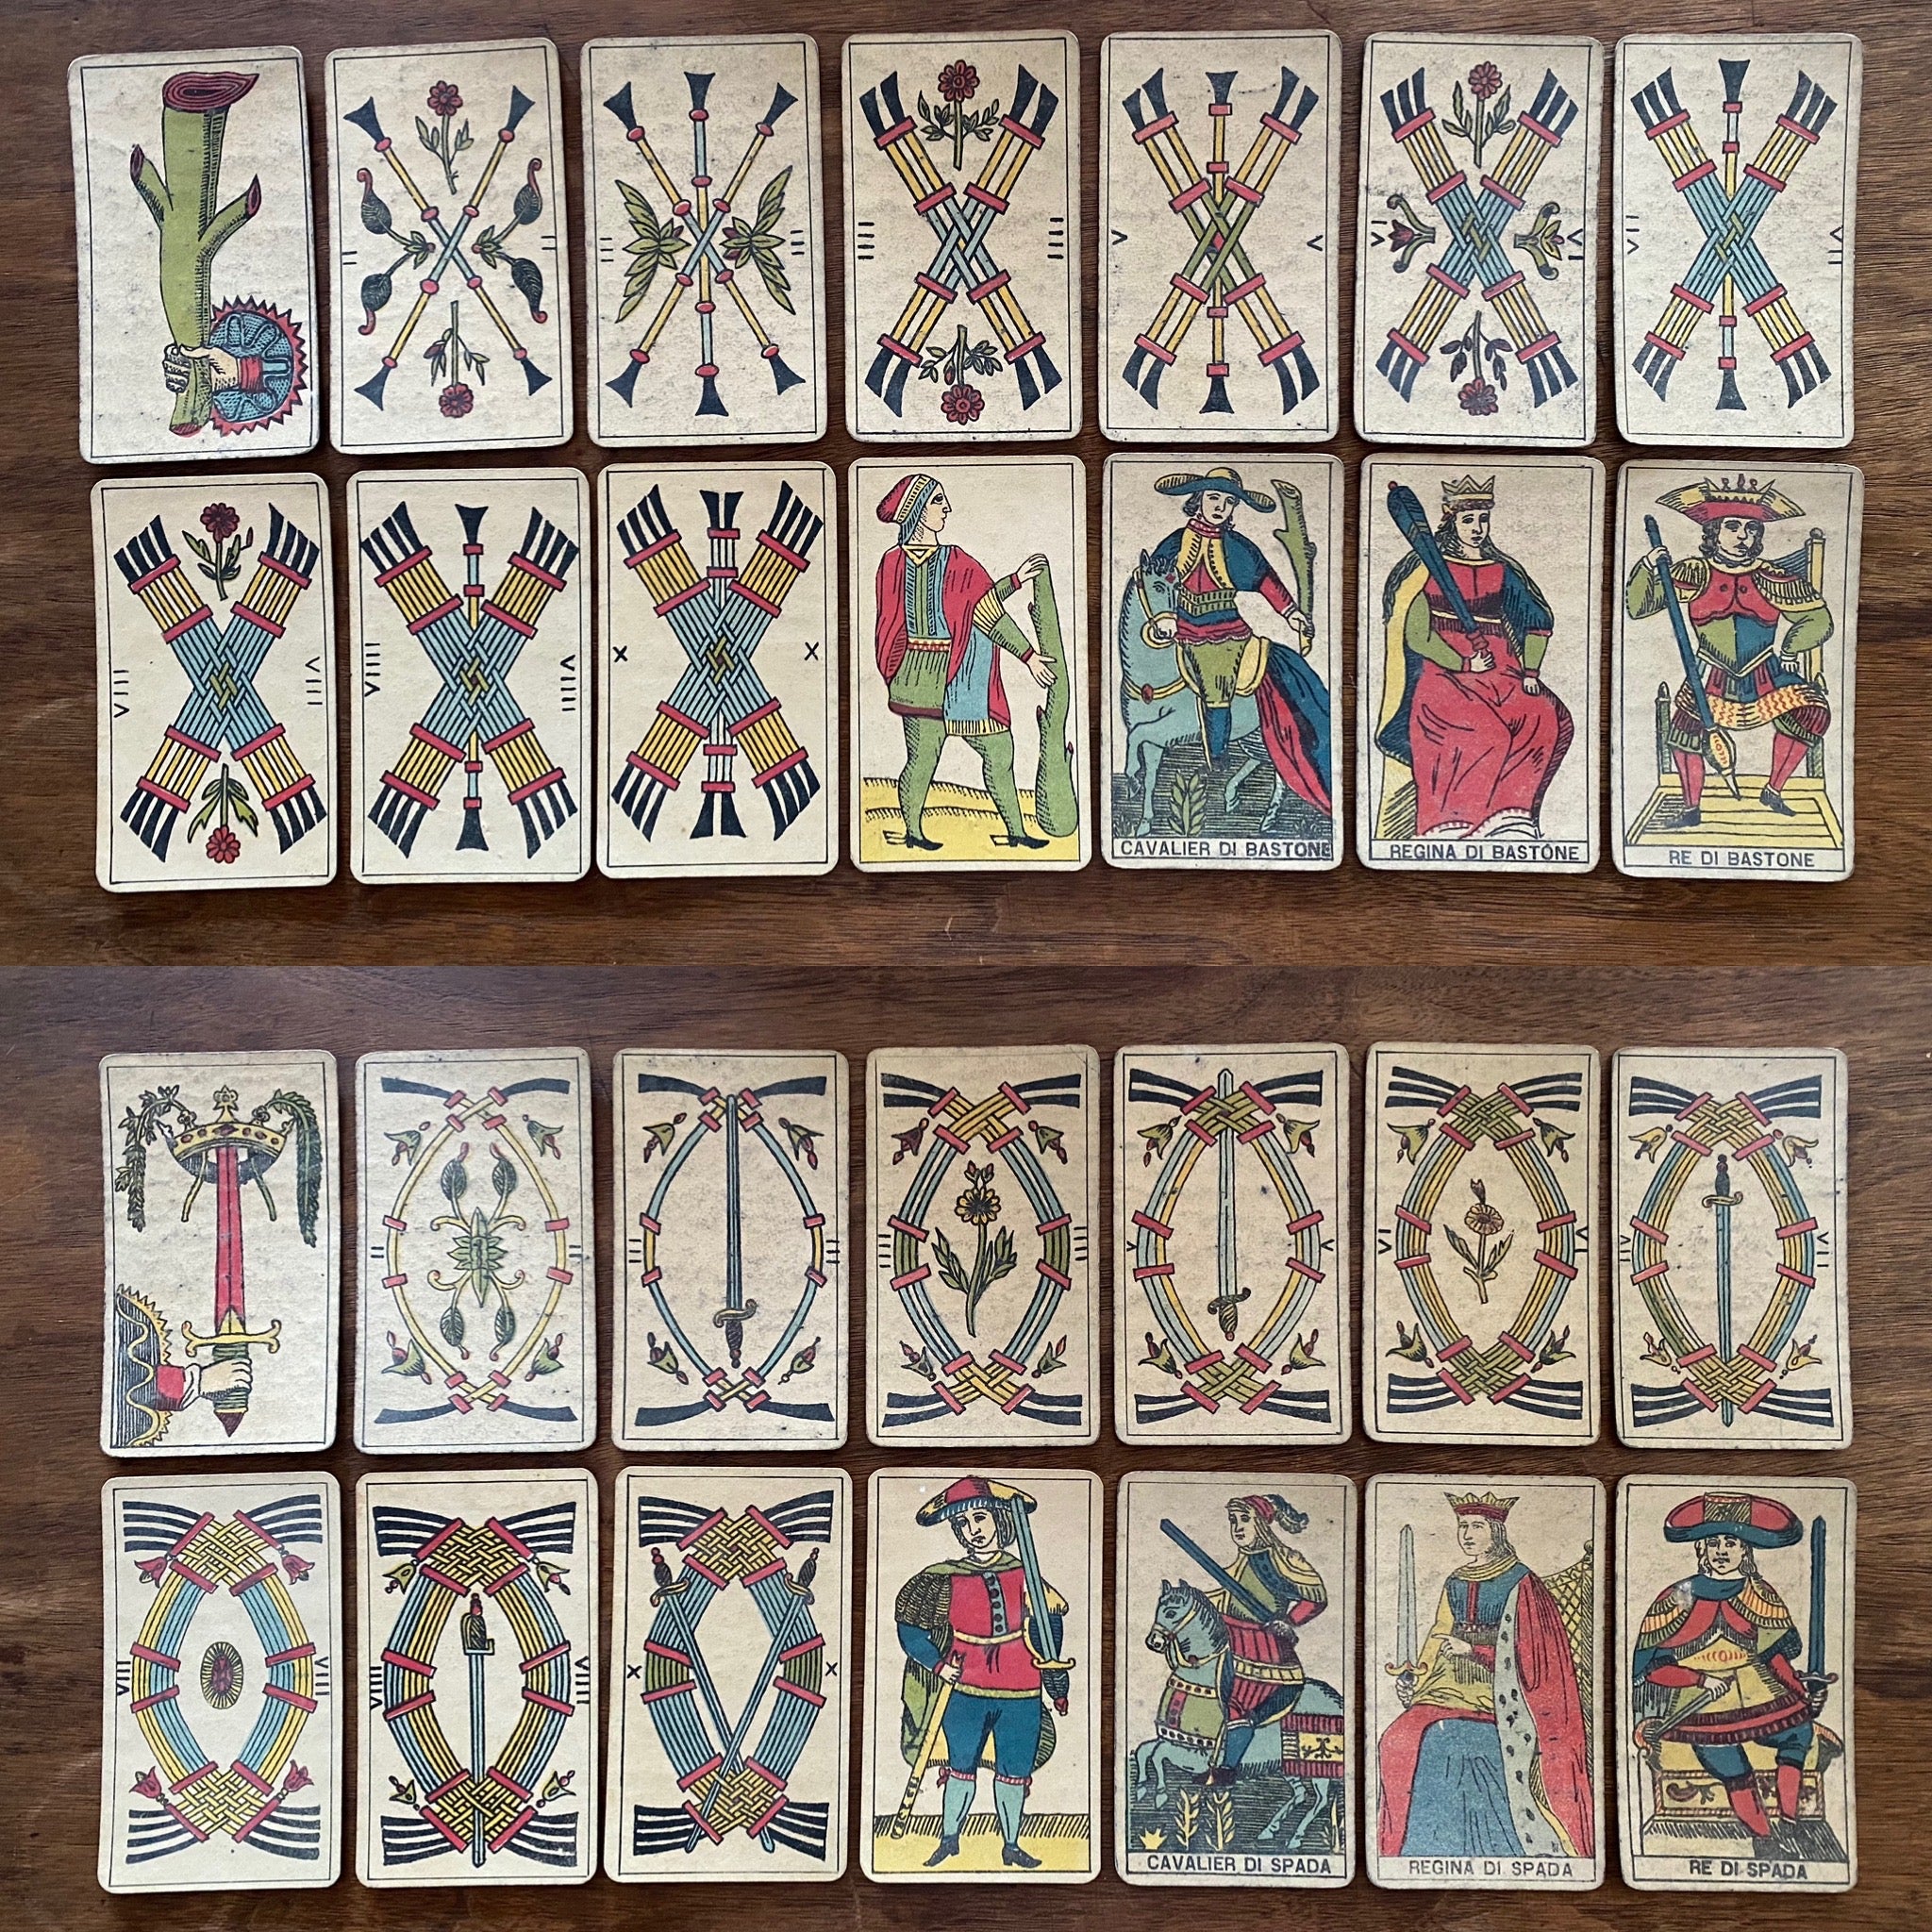 Antique Italian Tarot cards By Faustino Solesio Genova, Italy, c.1880.